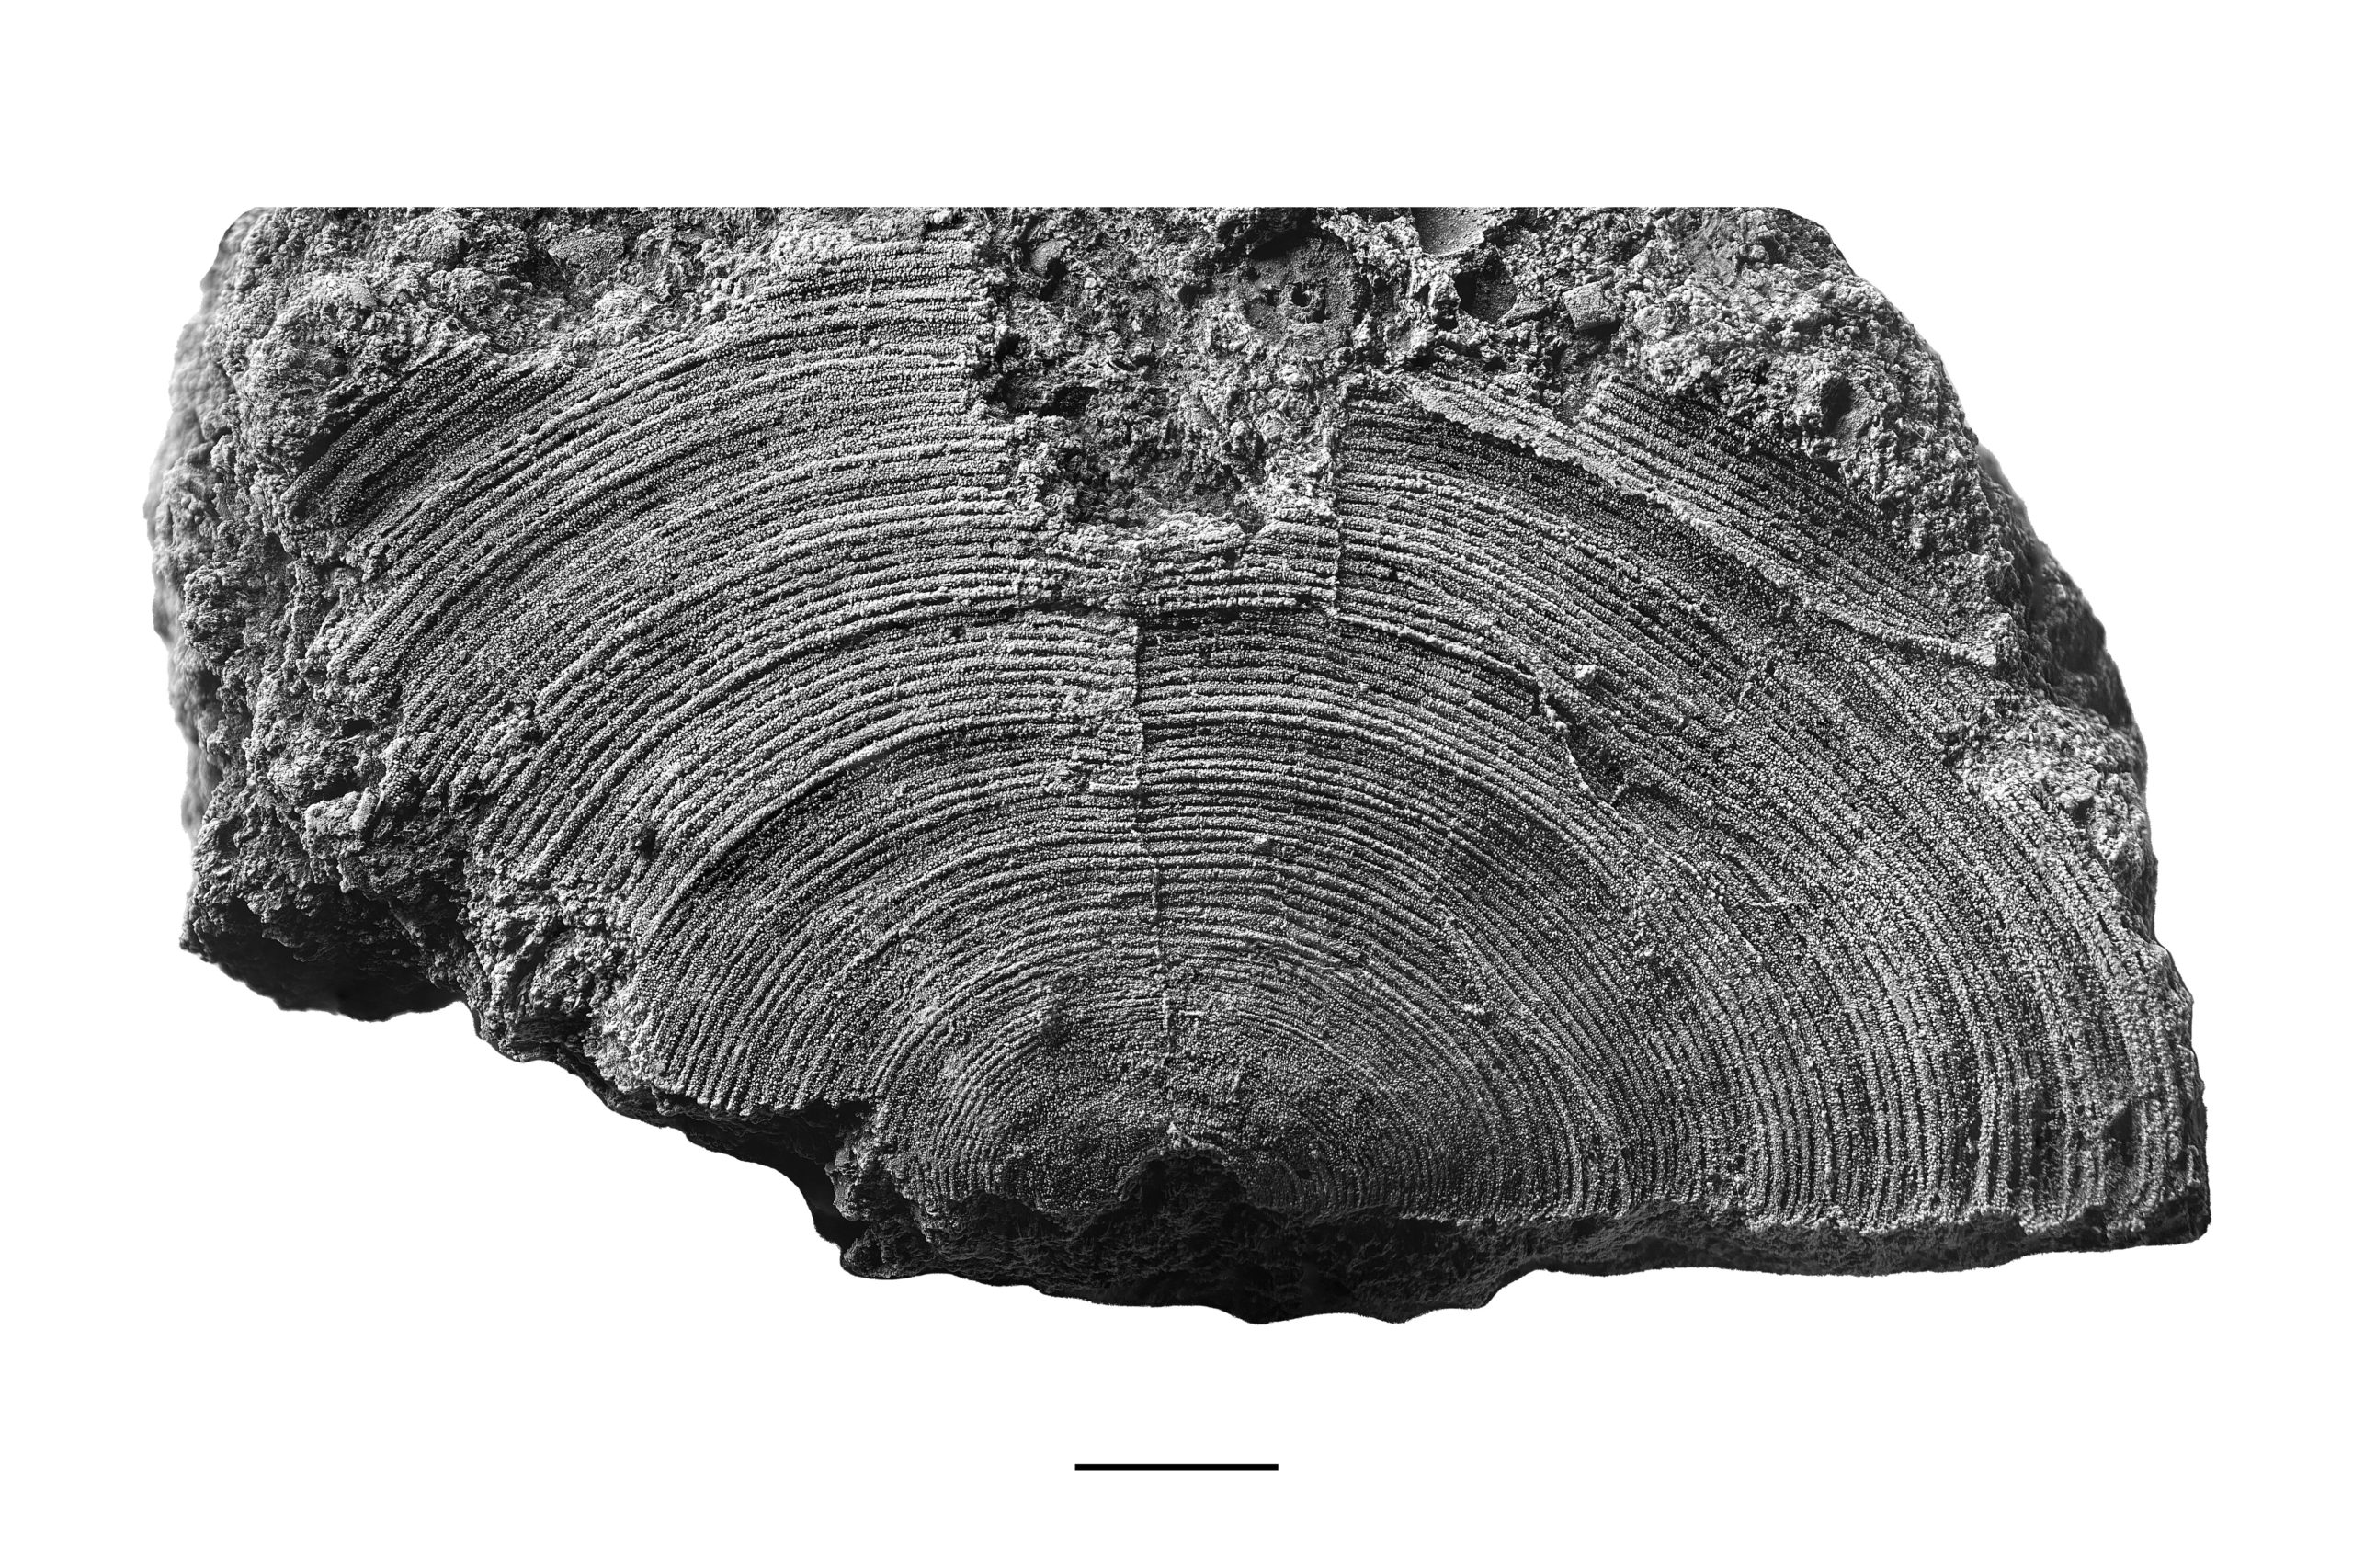 Isogramma sp., a Paleozoic brachiopod.